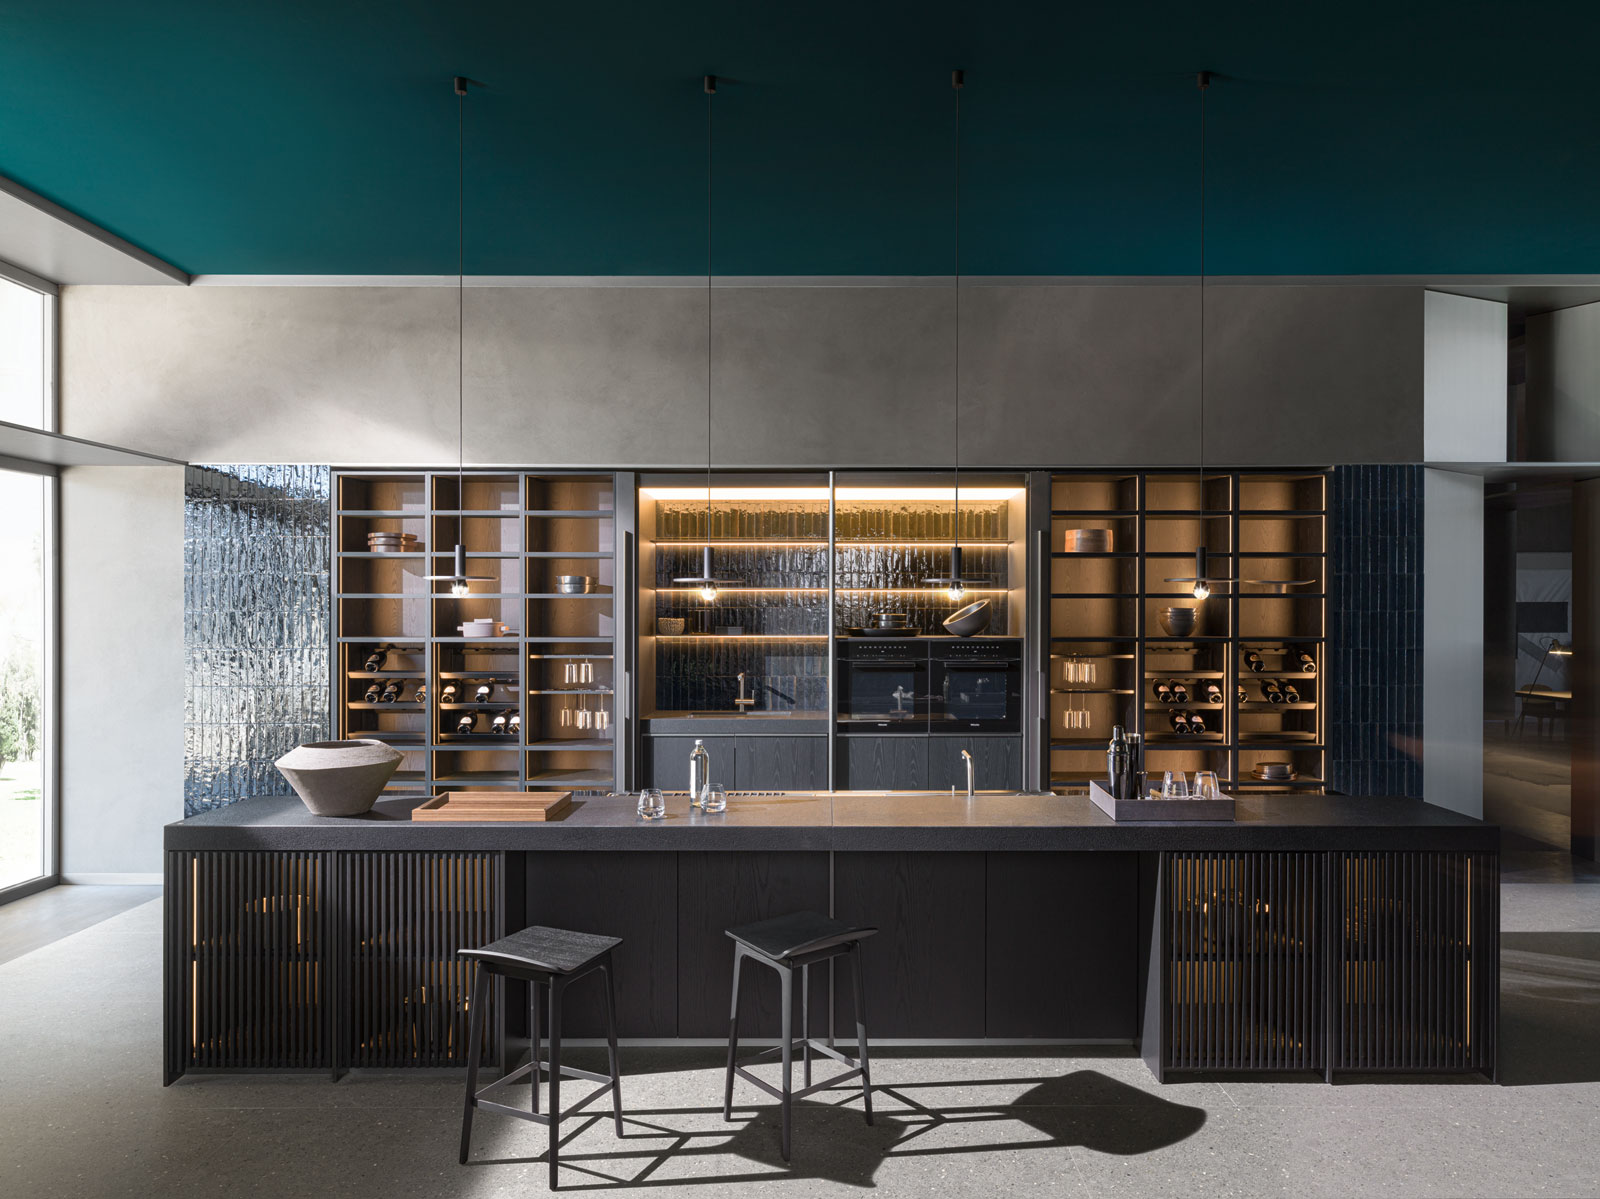 Ratio kitchen designed by Vincent Van Duysen